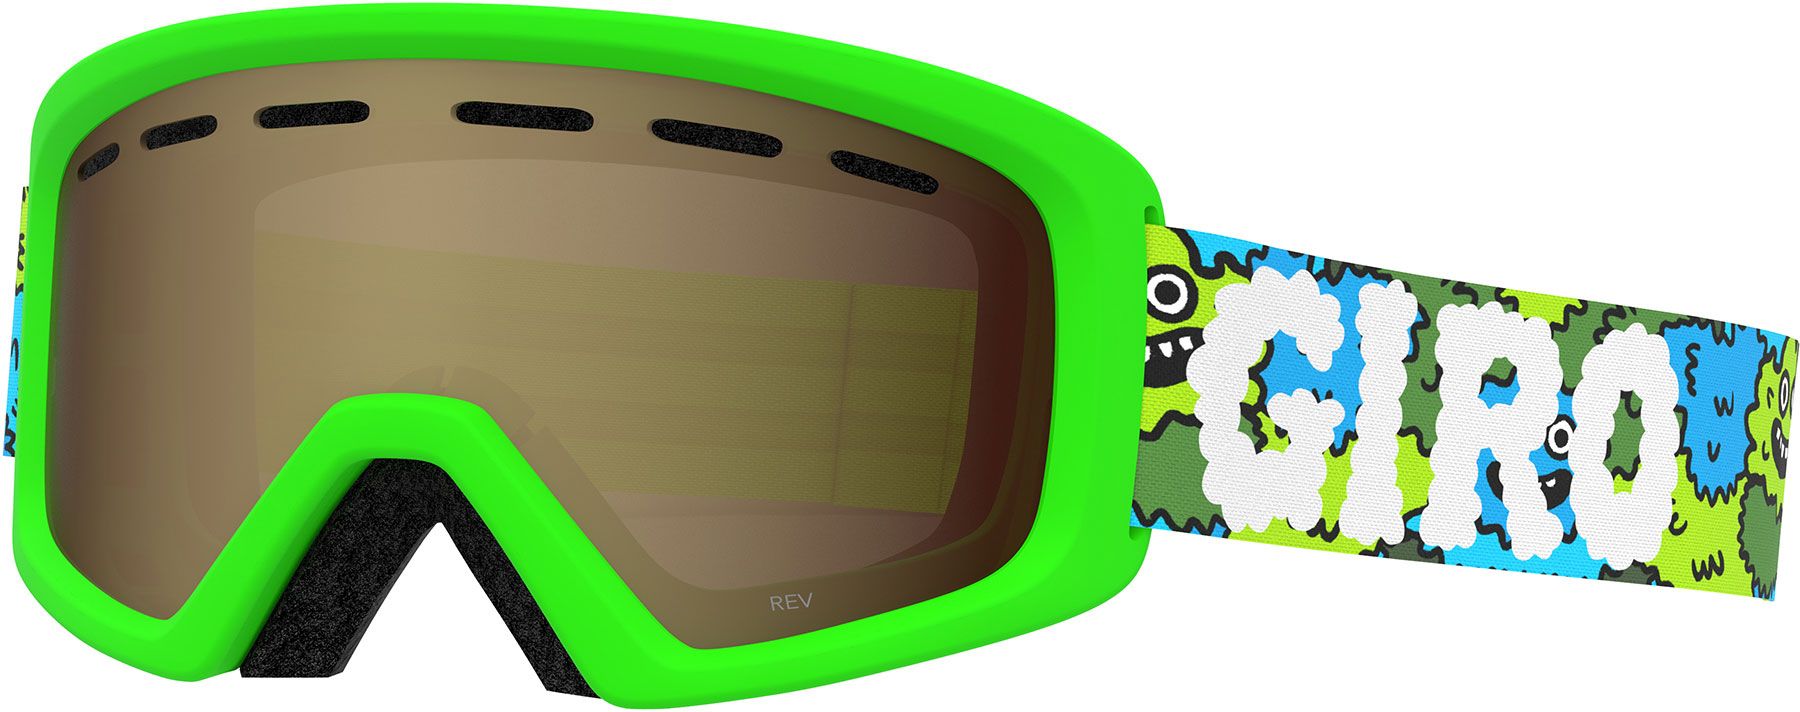 dicks sporting goods snow goggles